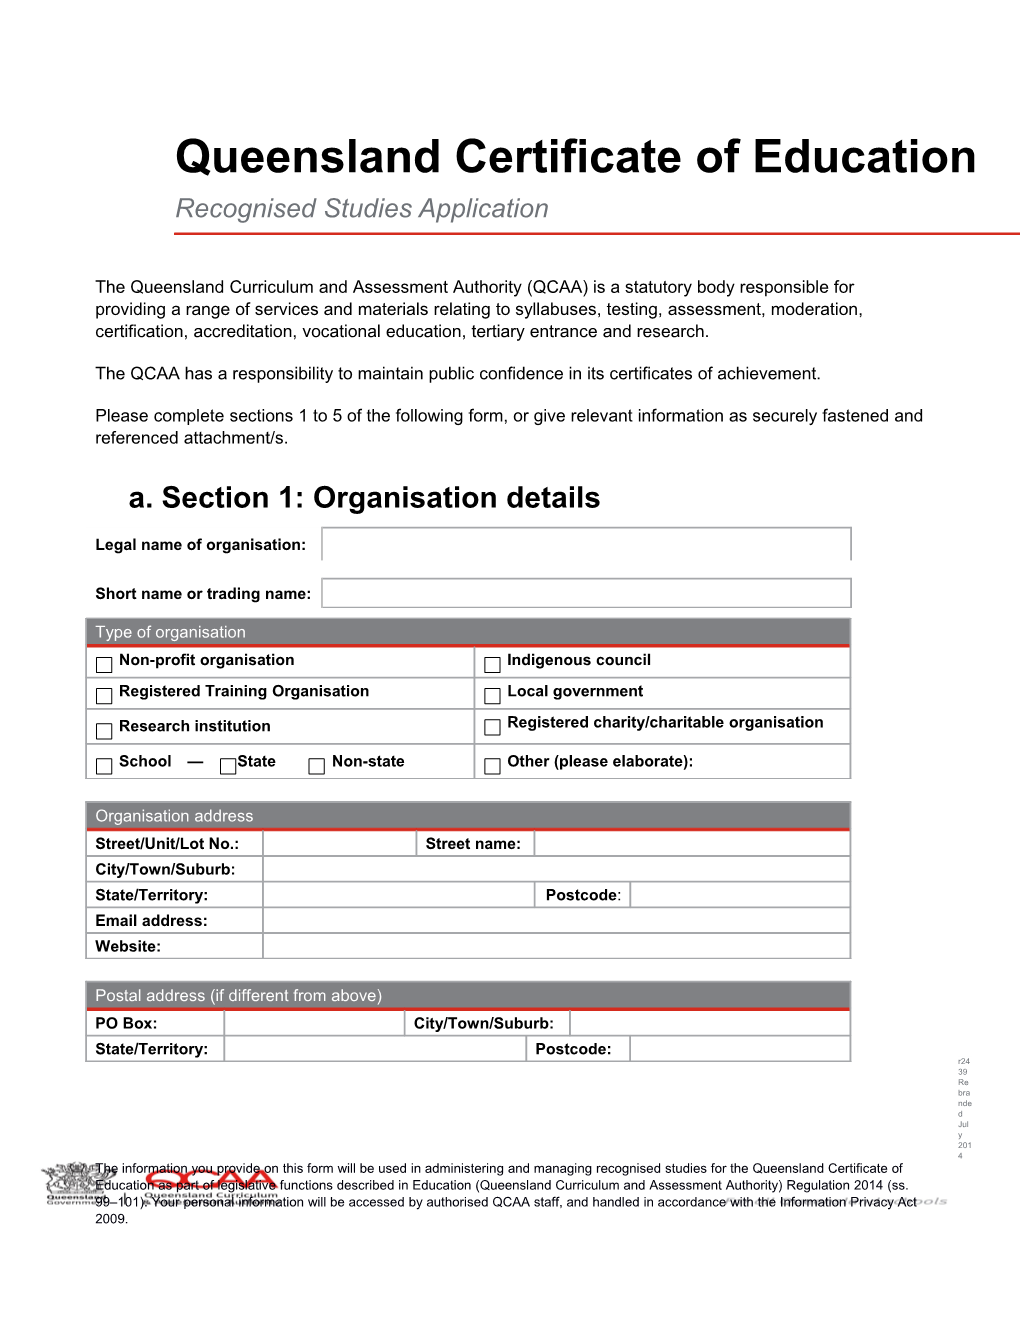 Queensland Certificate of Education: Recognised Studies Application